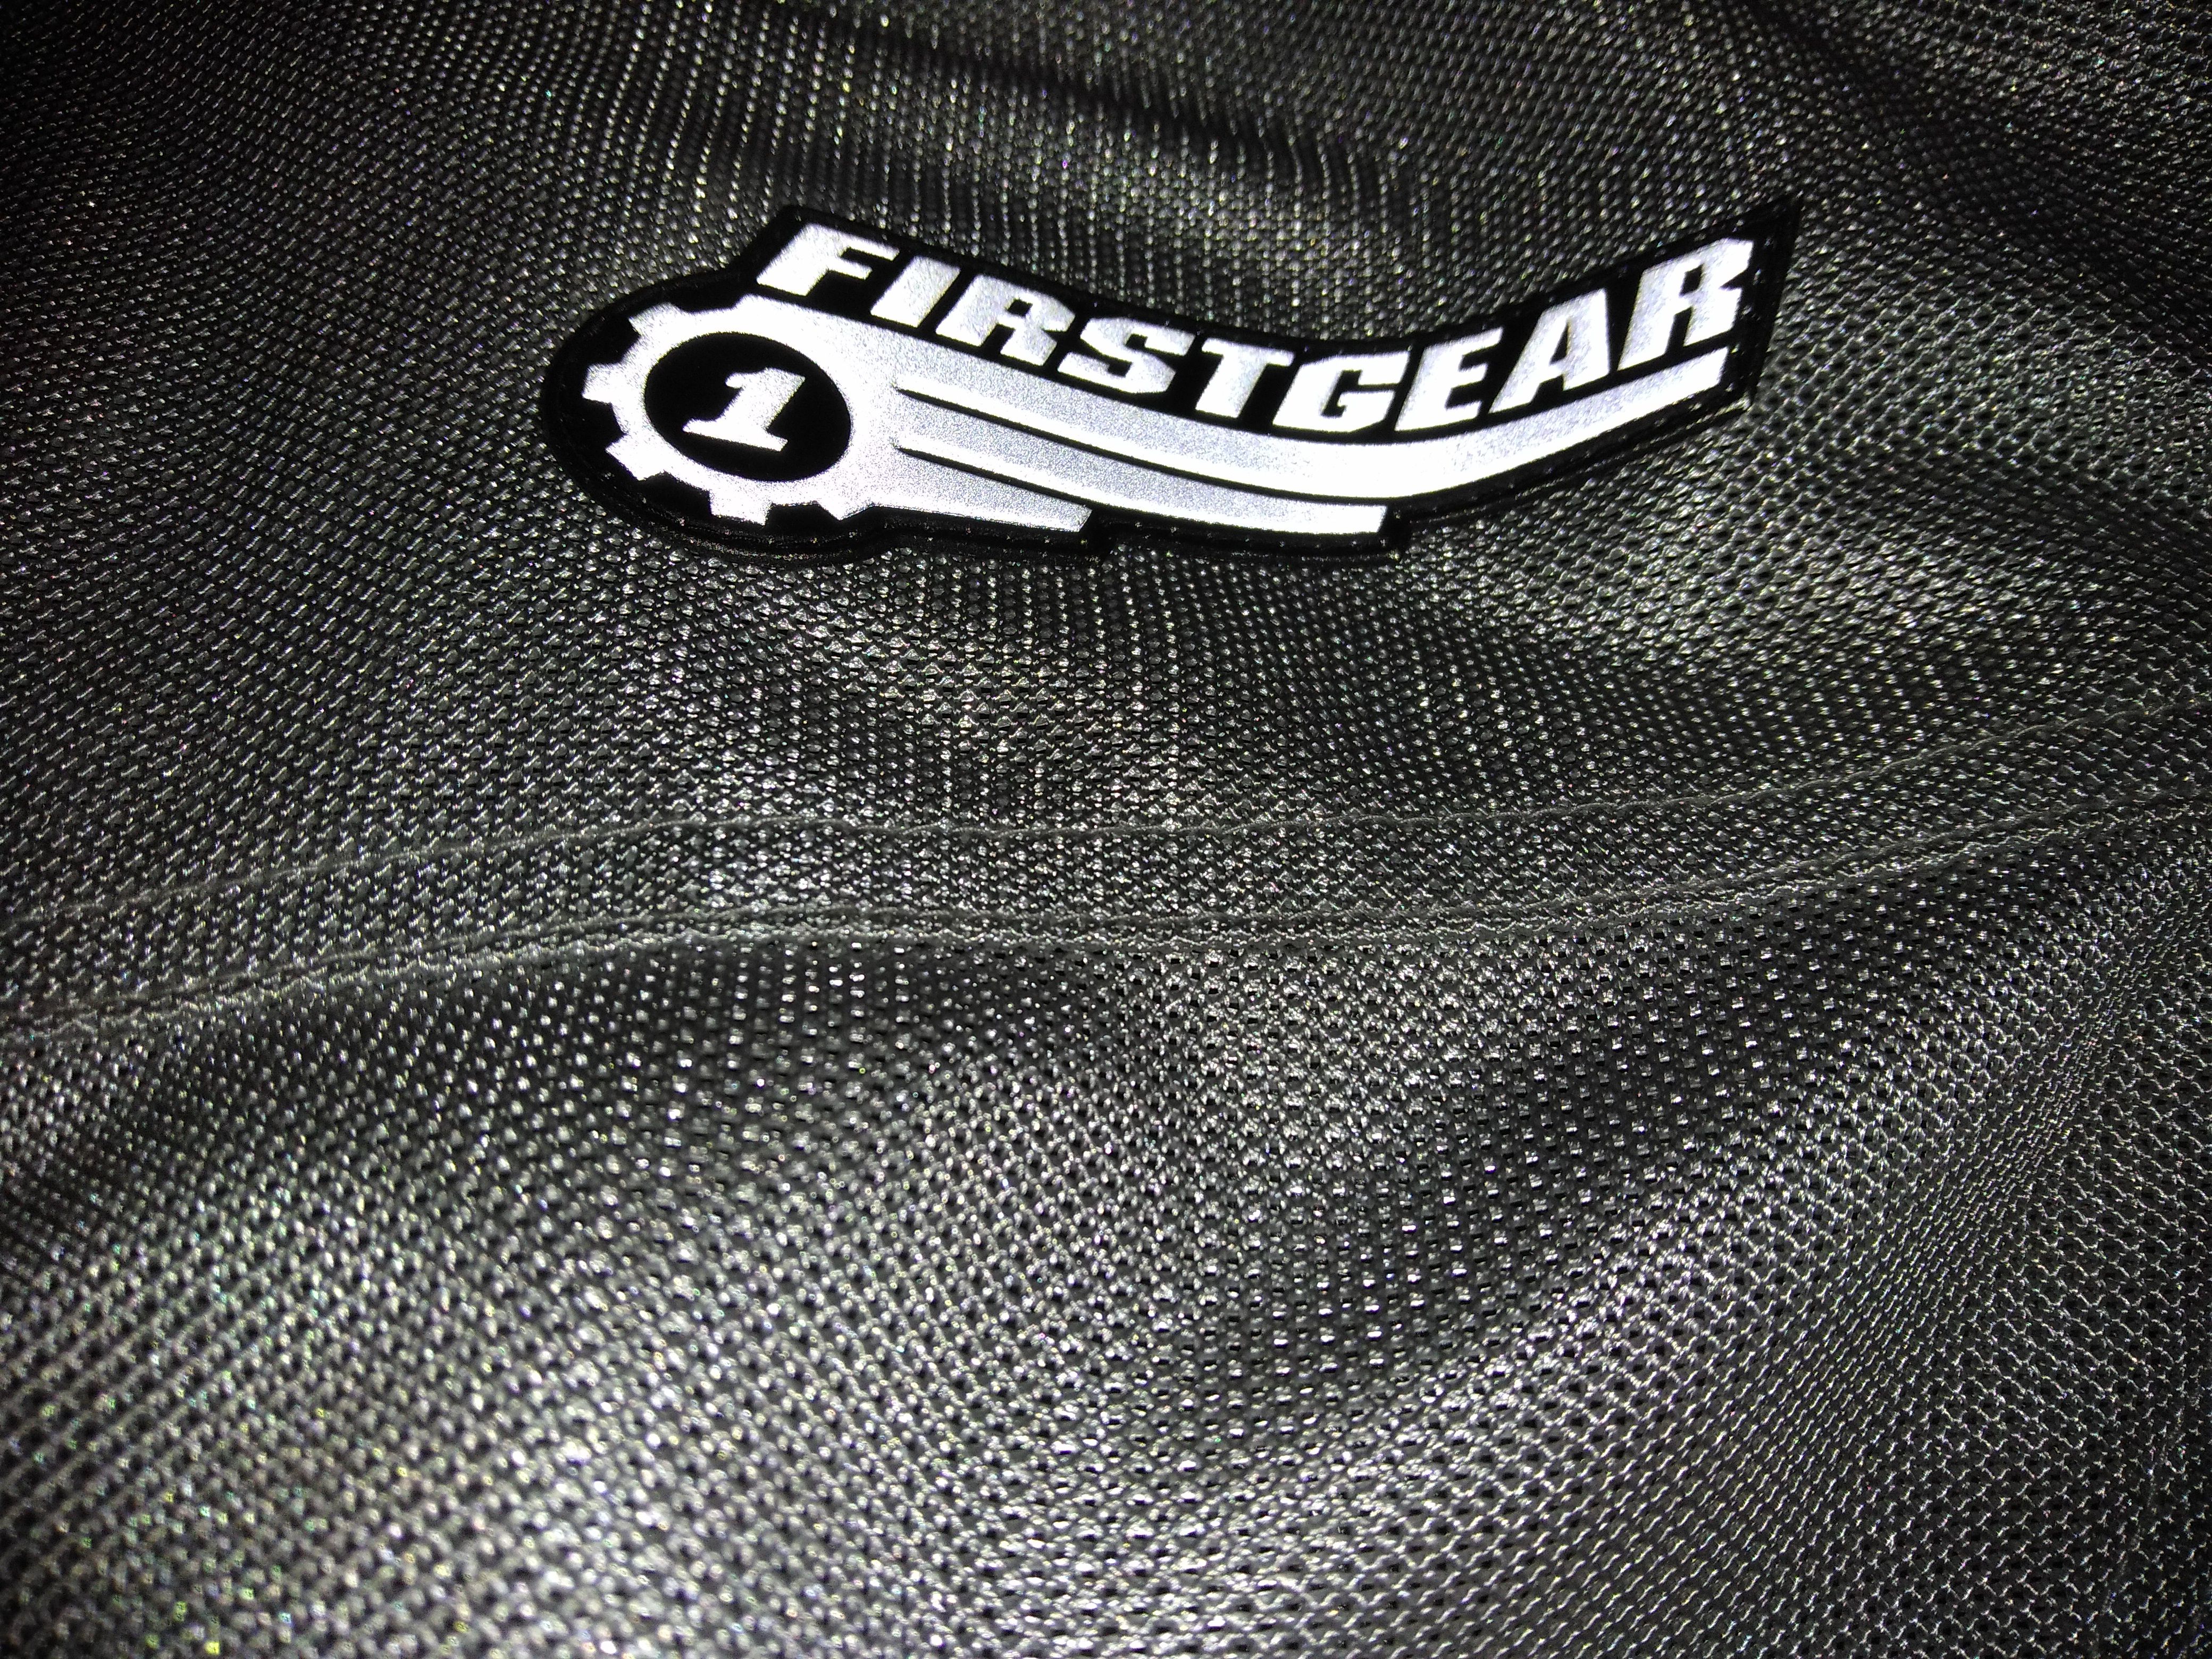 First gear meshtex2 motorcycle jacket so. Small